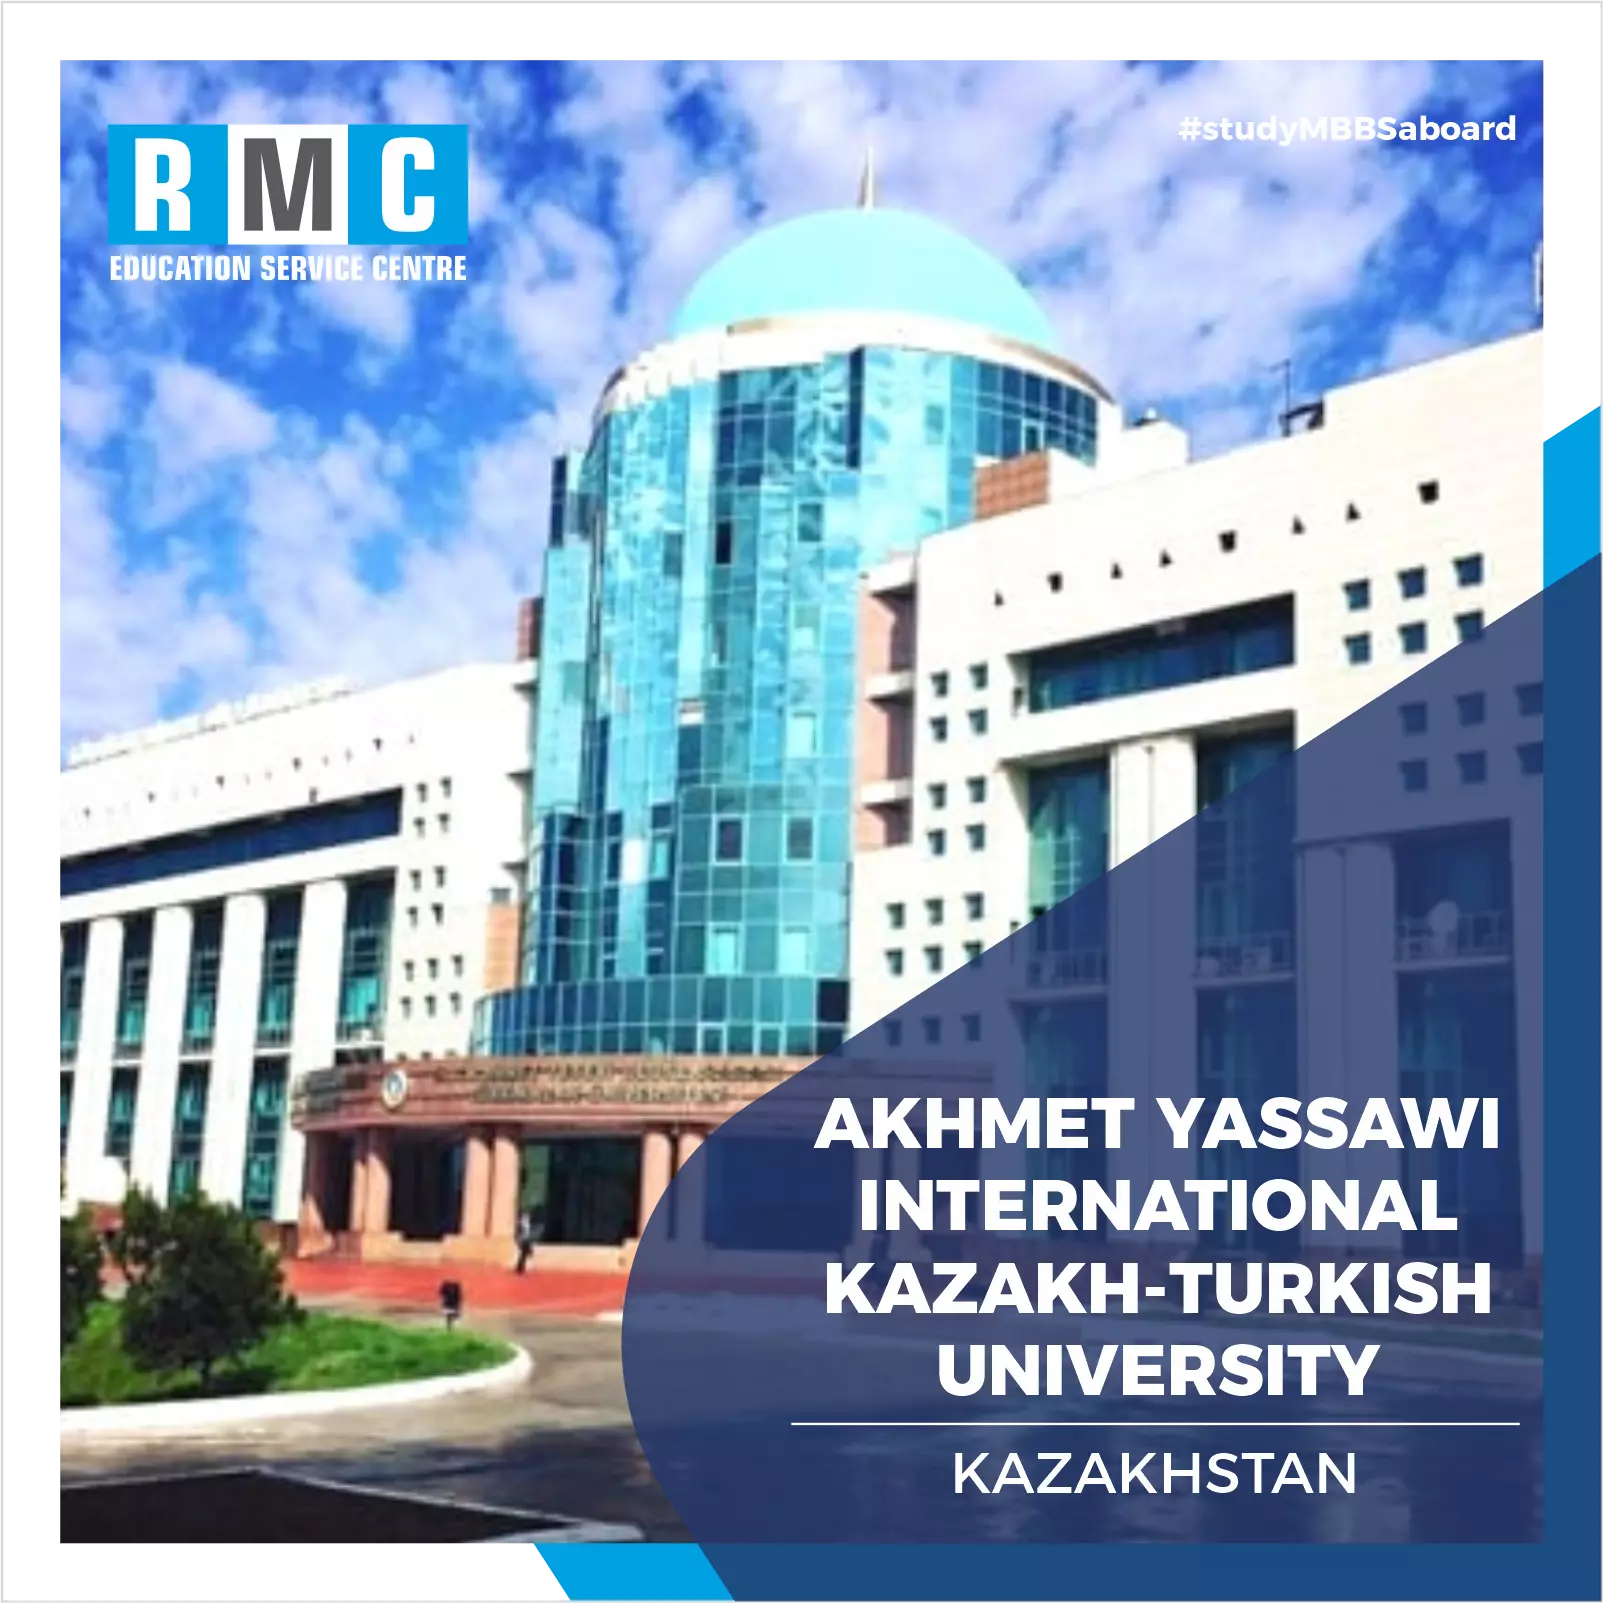 Akhmet Yassawi International Kazakh-Turkish University